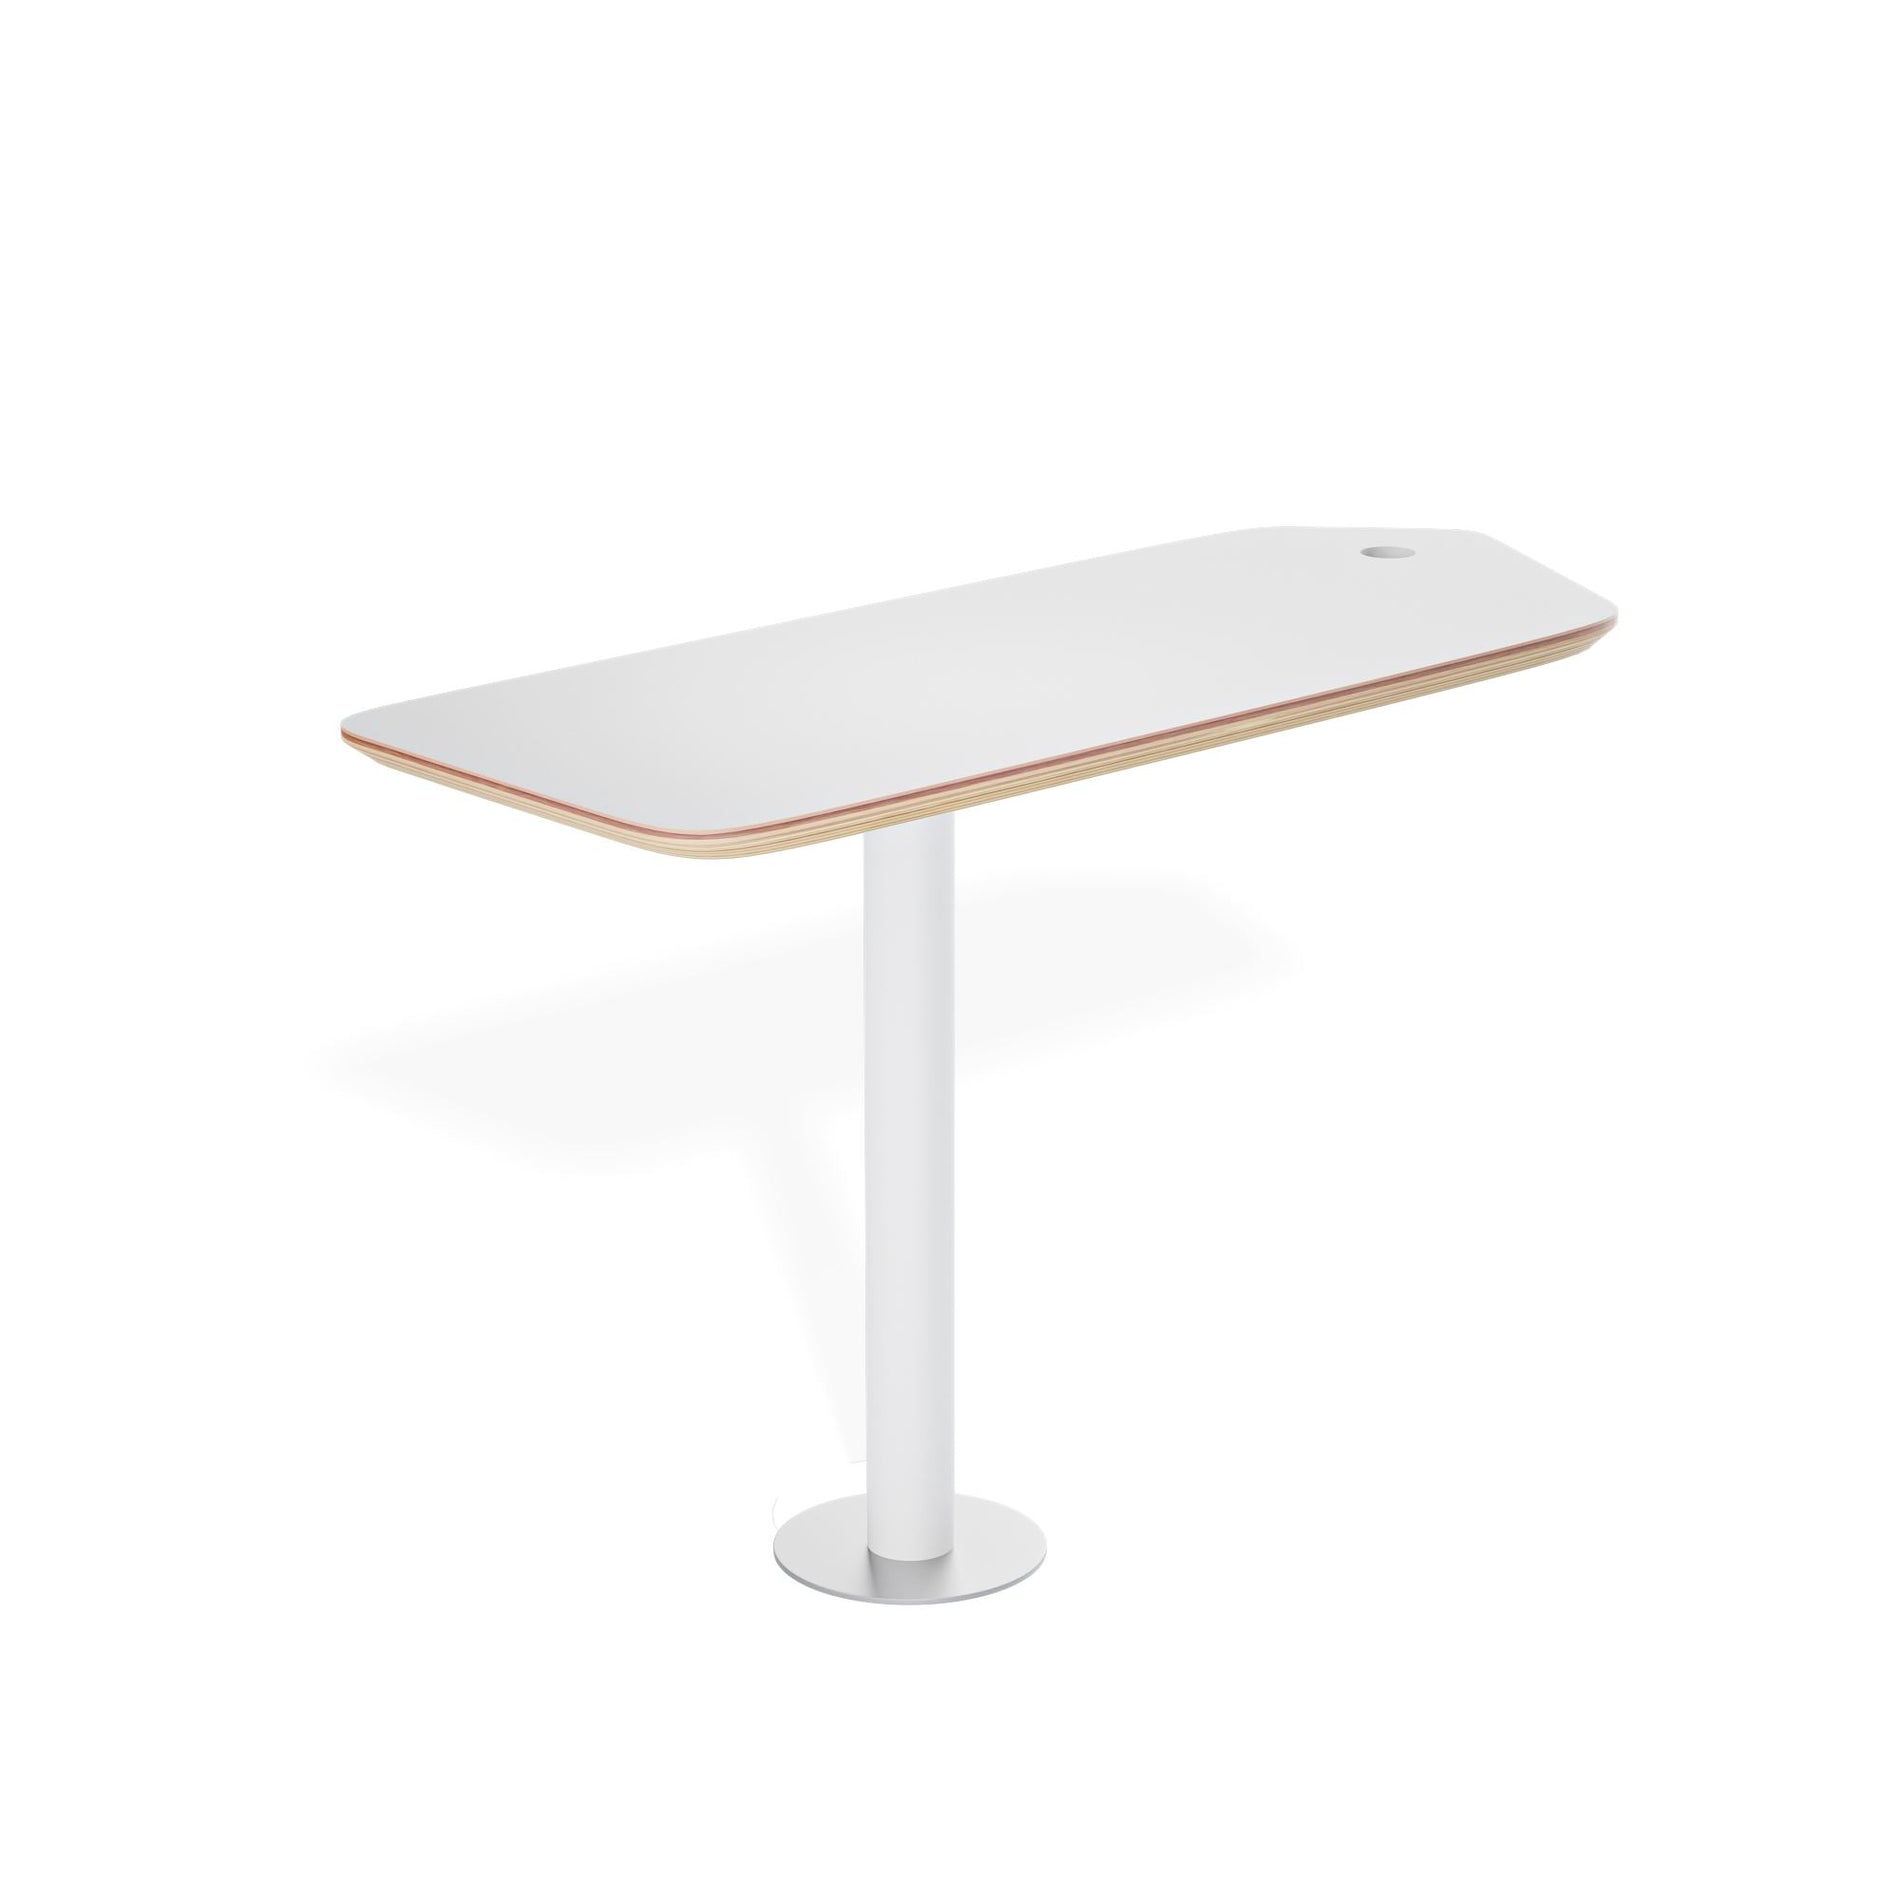 Møbler for 1-2 person telefonboderDiagonal Table